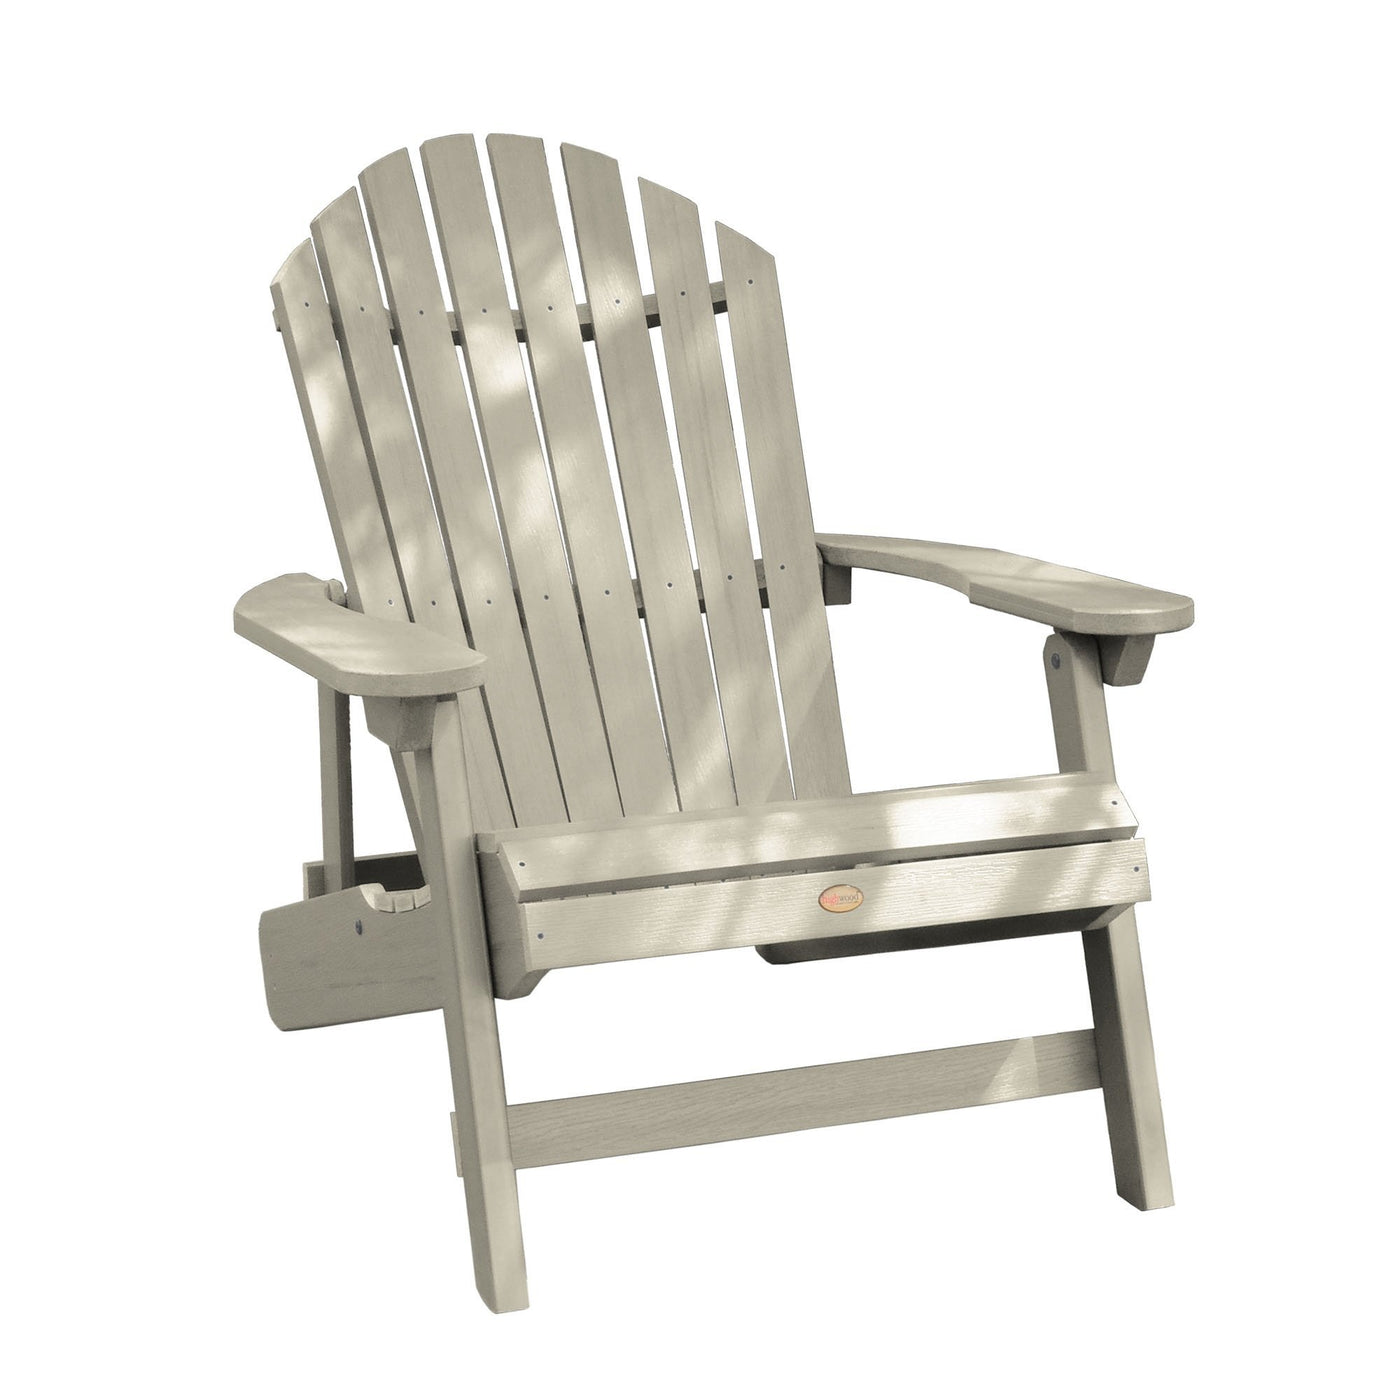 Refurbished King Hamilton Folding & Reclining Adirondack Chair Highwood USA Whitewash 